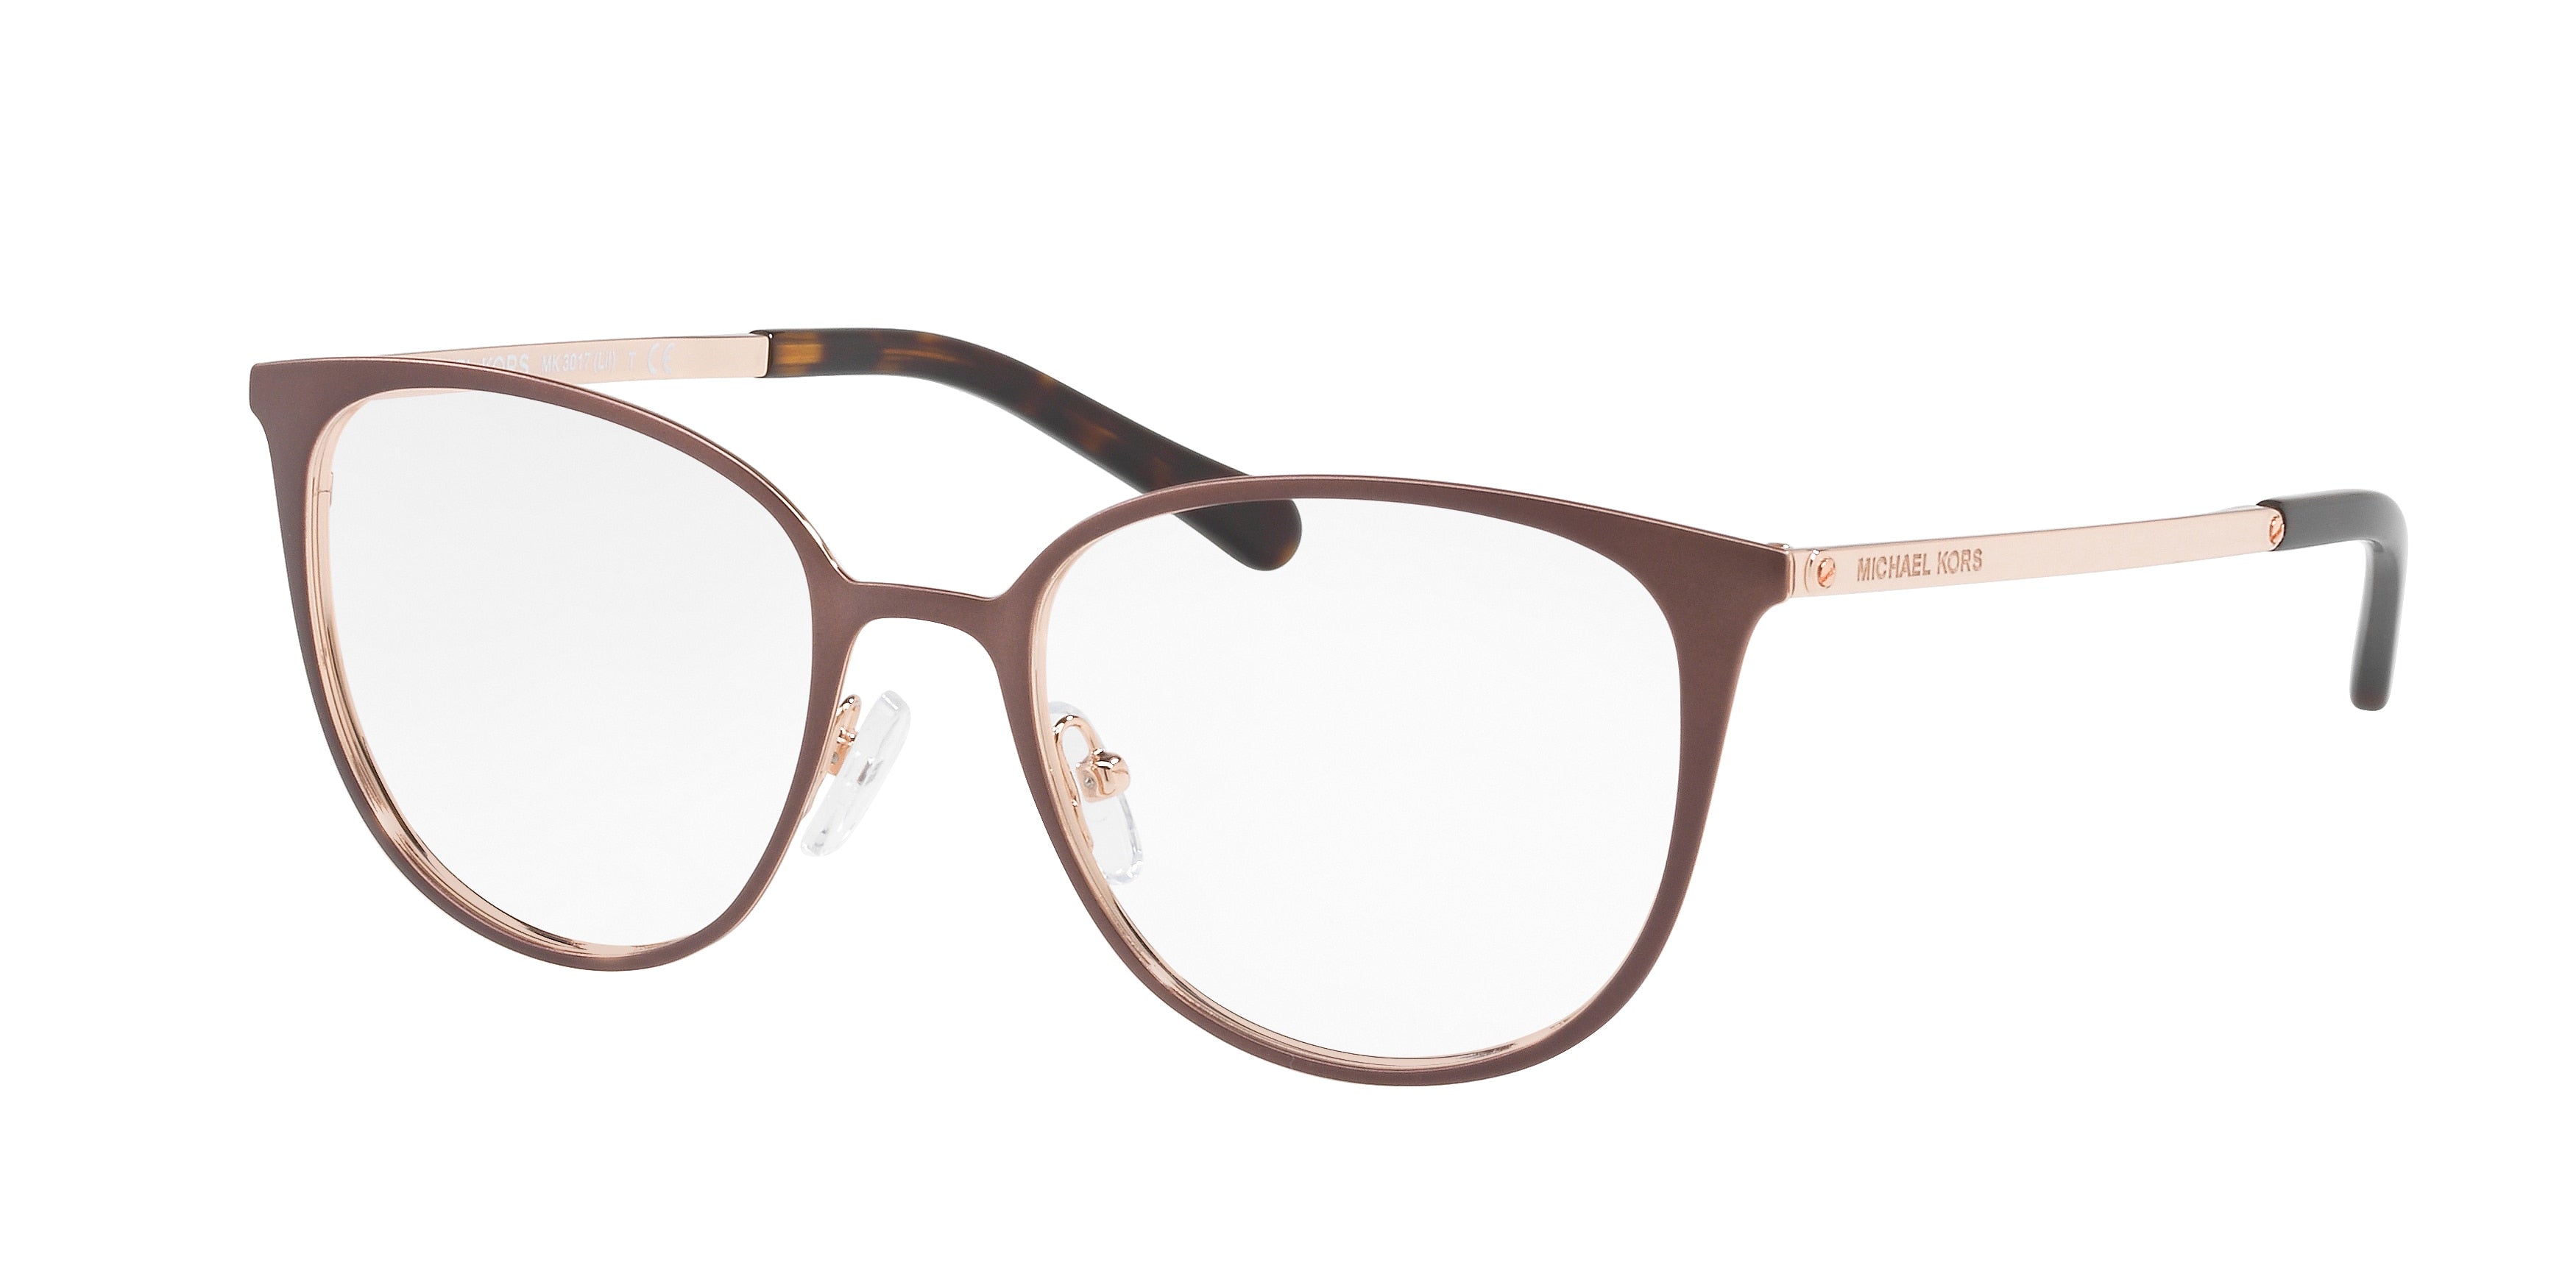 Michael Kors LIL MK3017 Square Eyeglasses